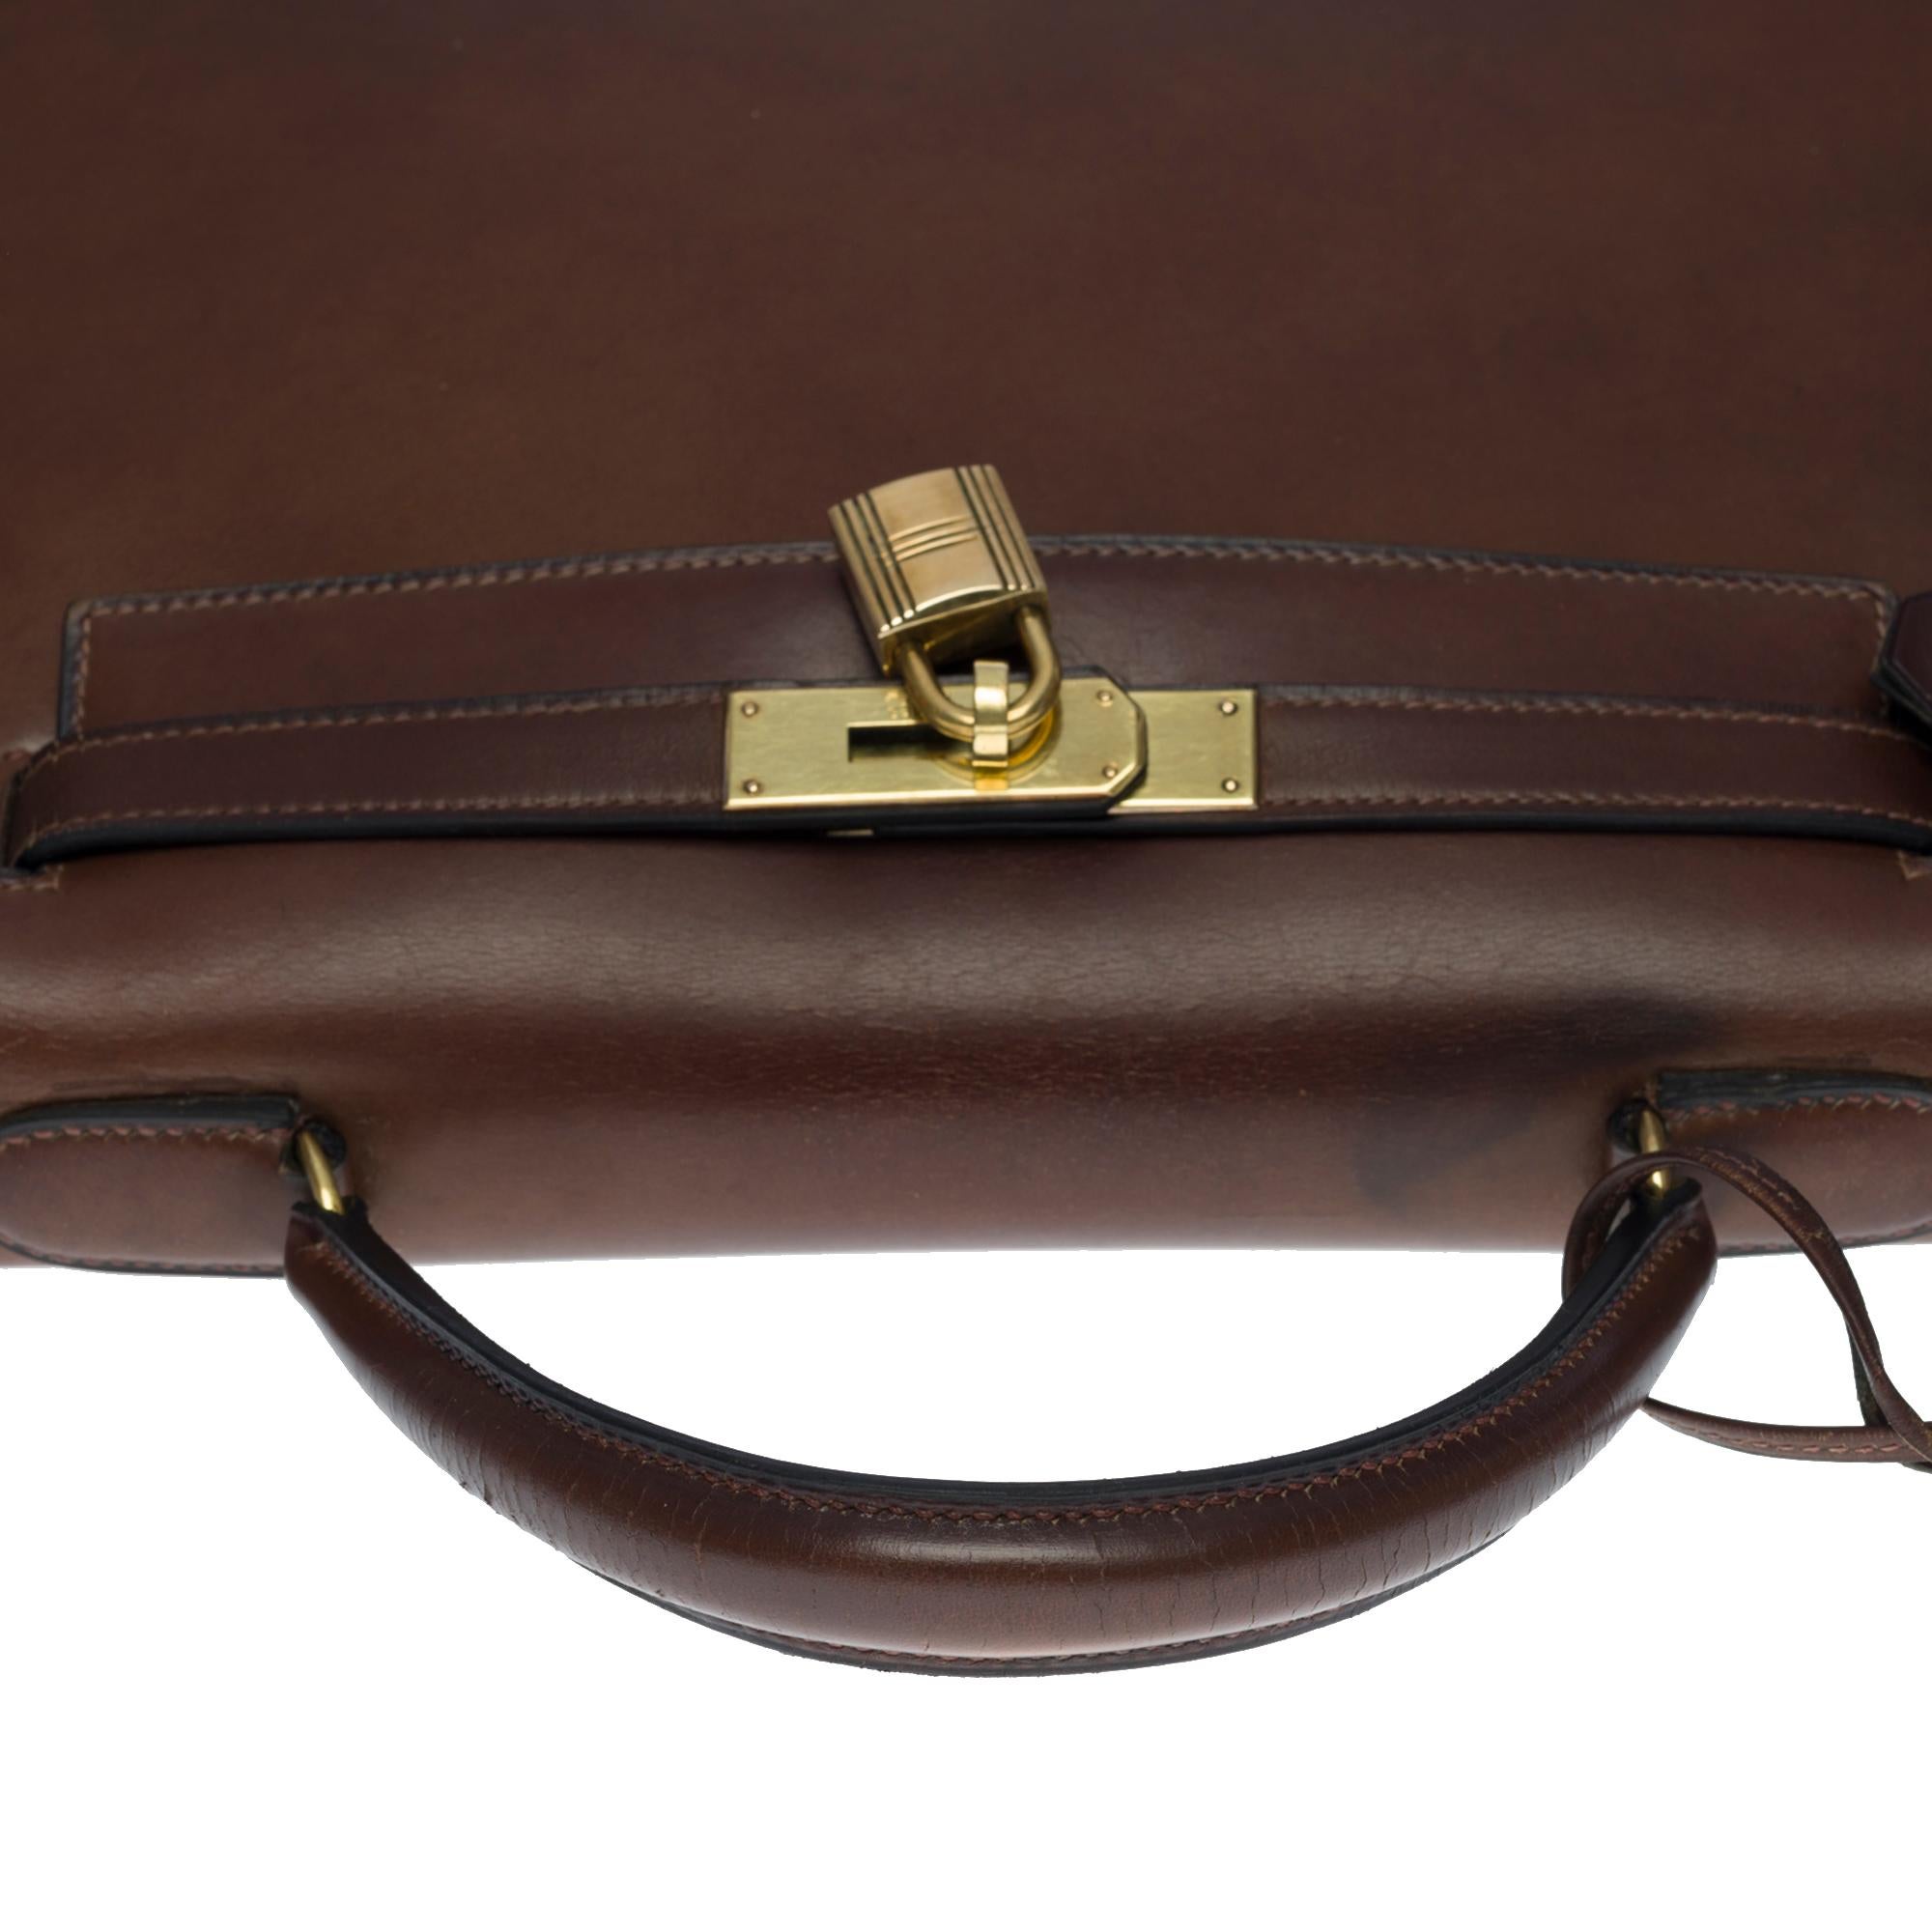 Women's Amazing Hermes Kelly 28 sellier handbag in brown Calf leather, GHW